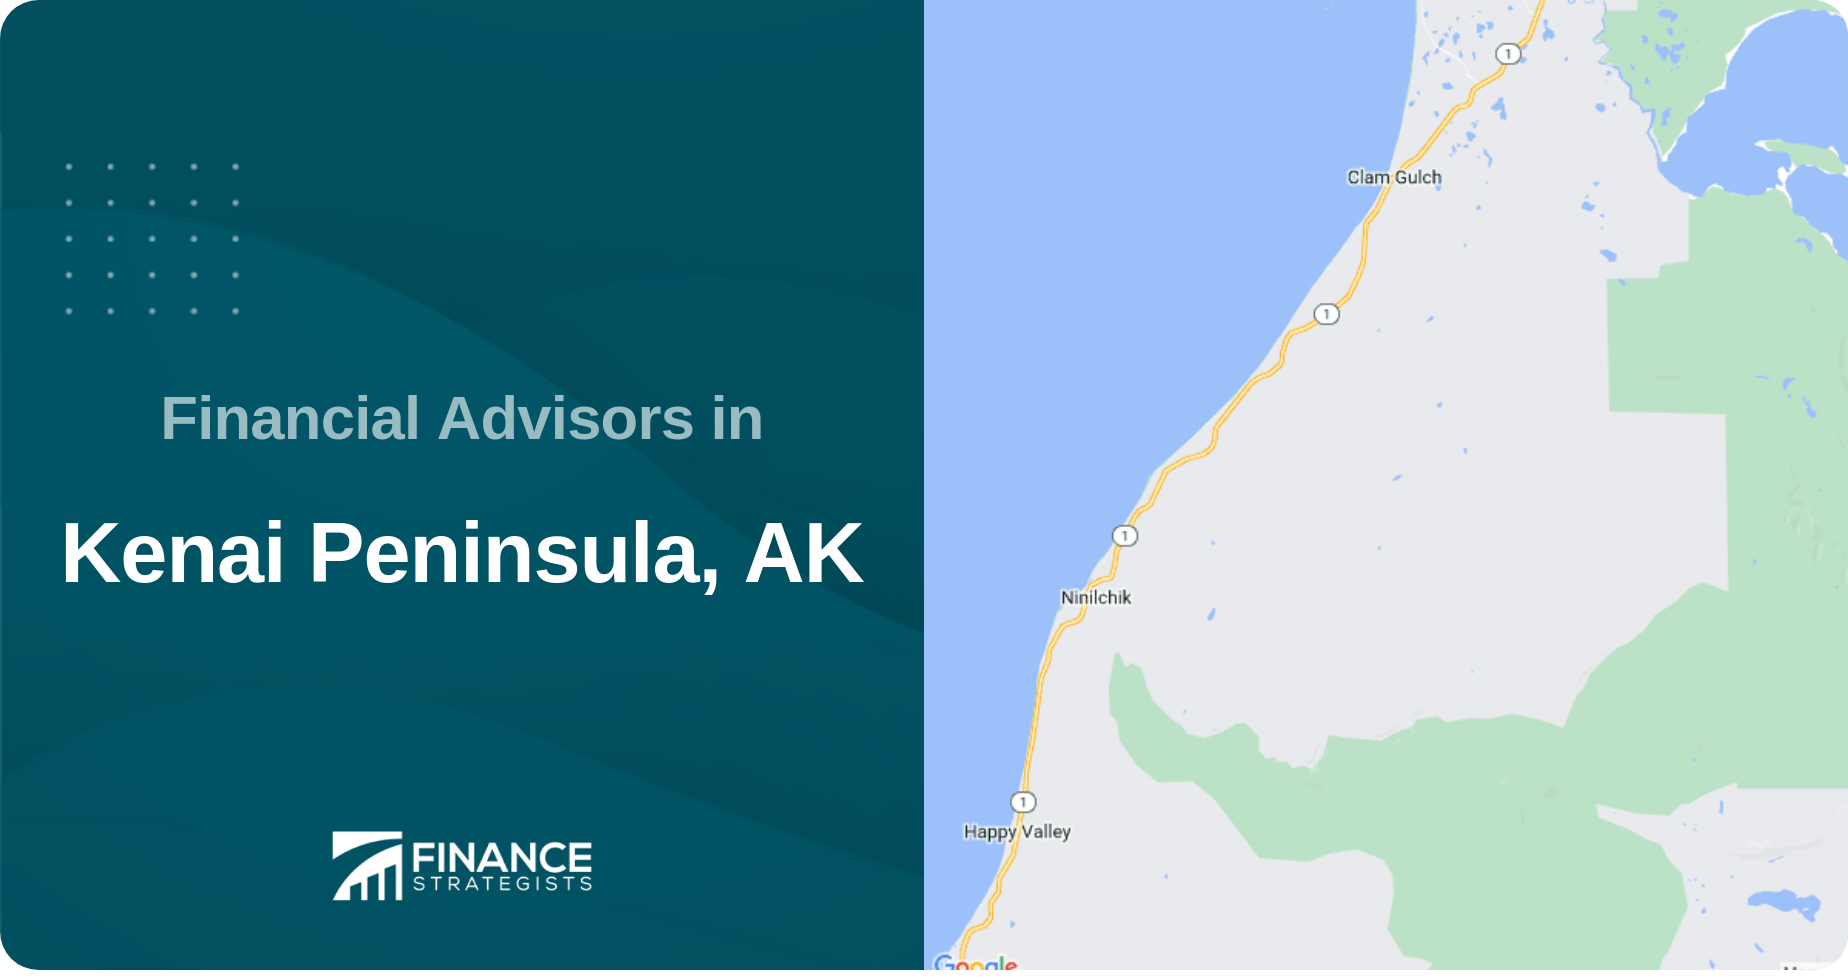 Financial Advisors in Kenai Peninsula, AK